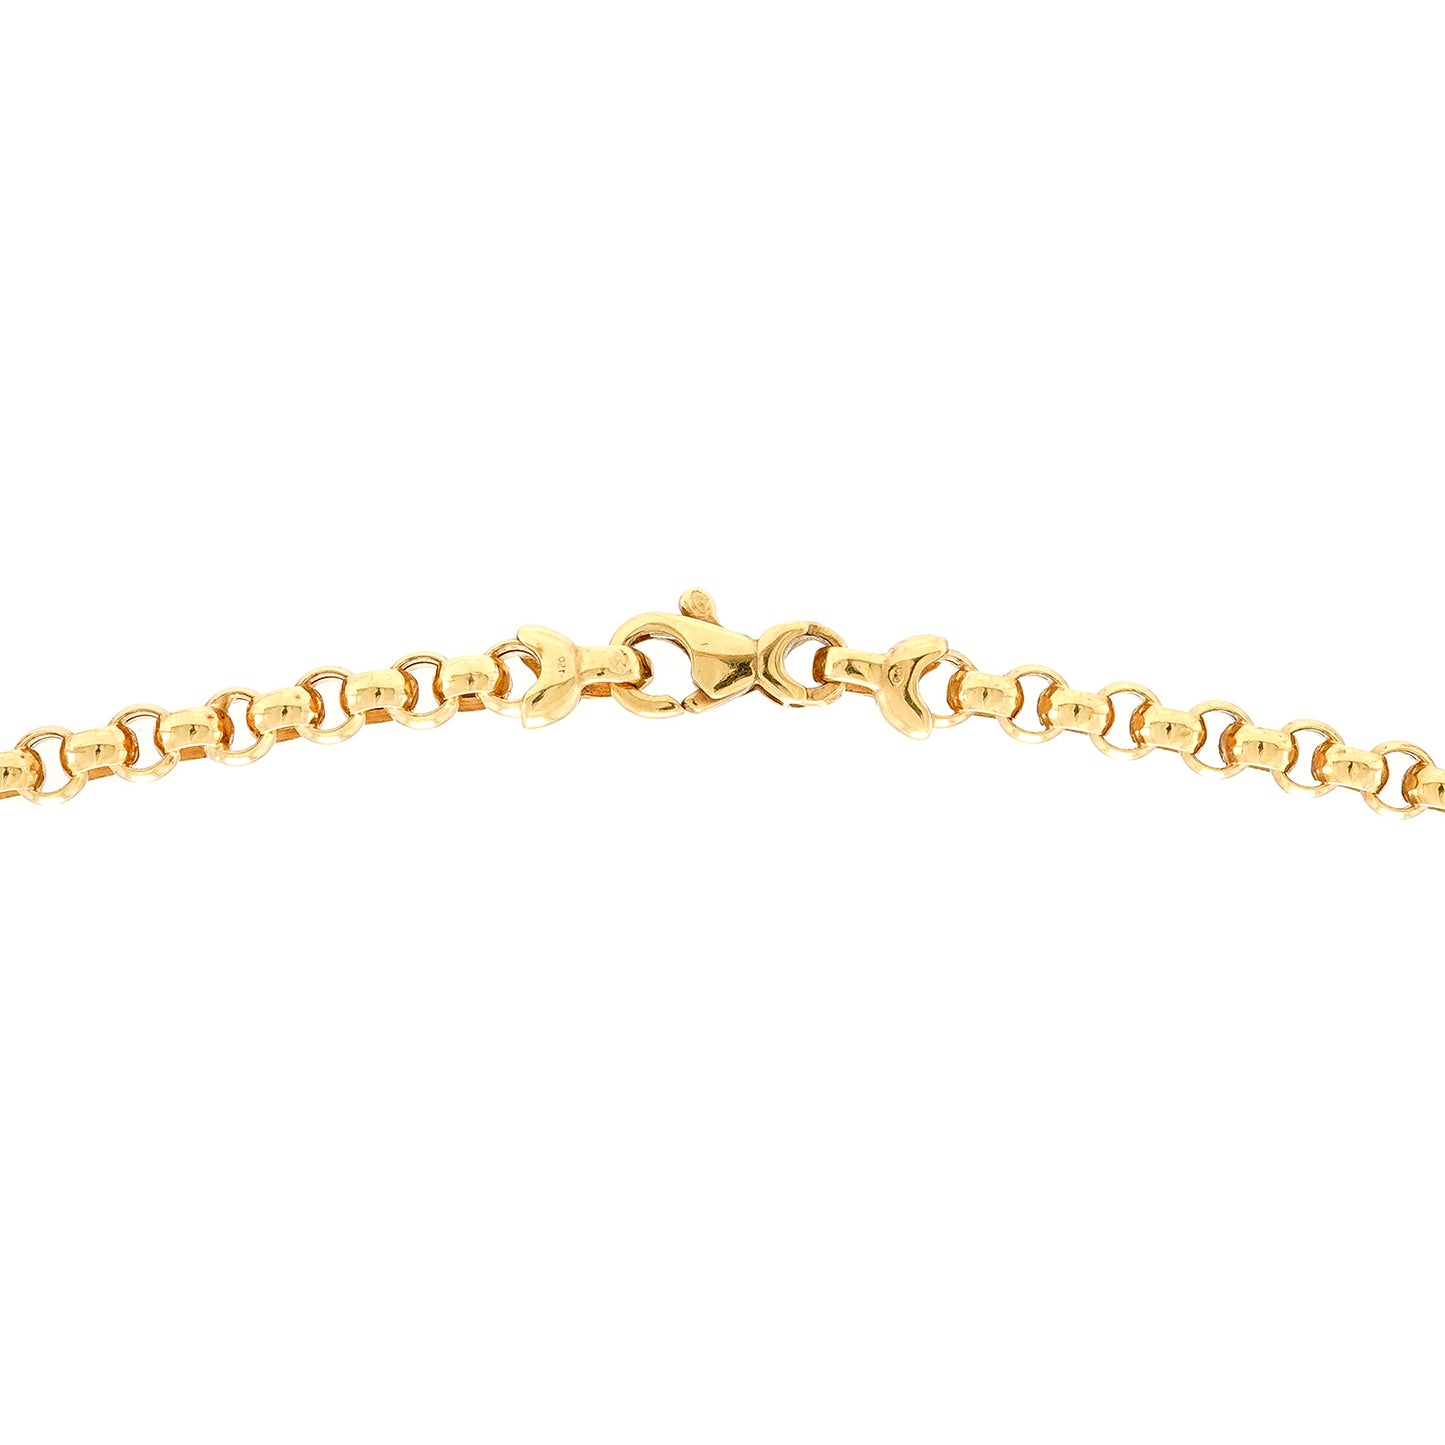 Gemme pendant Art Deco necklace pea yellow gold 750 18K 42cm women's jewelry gold necklace